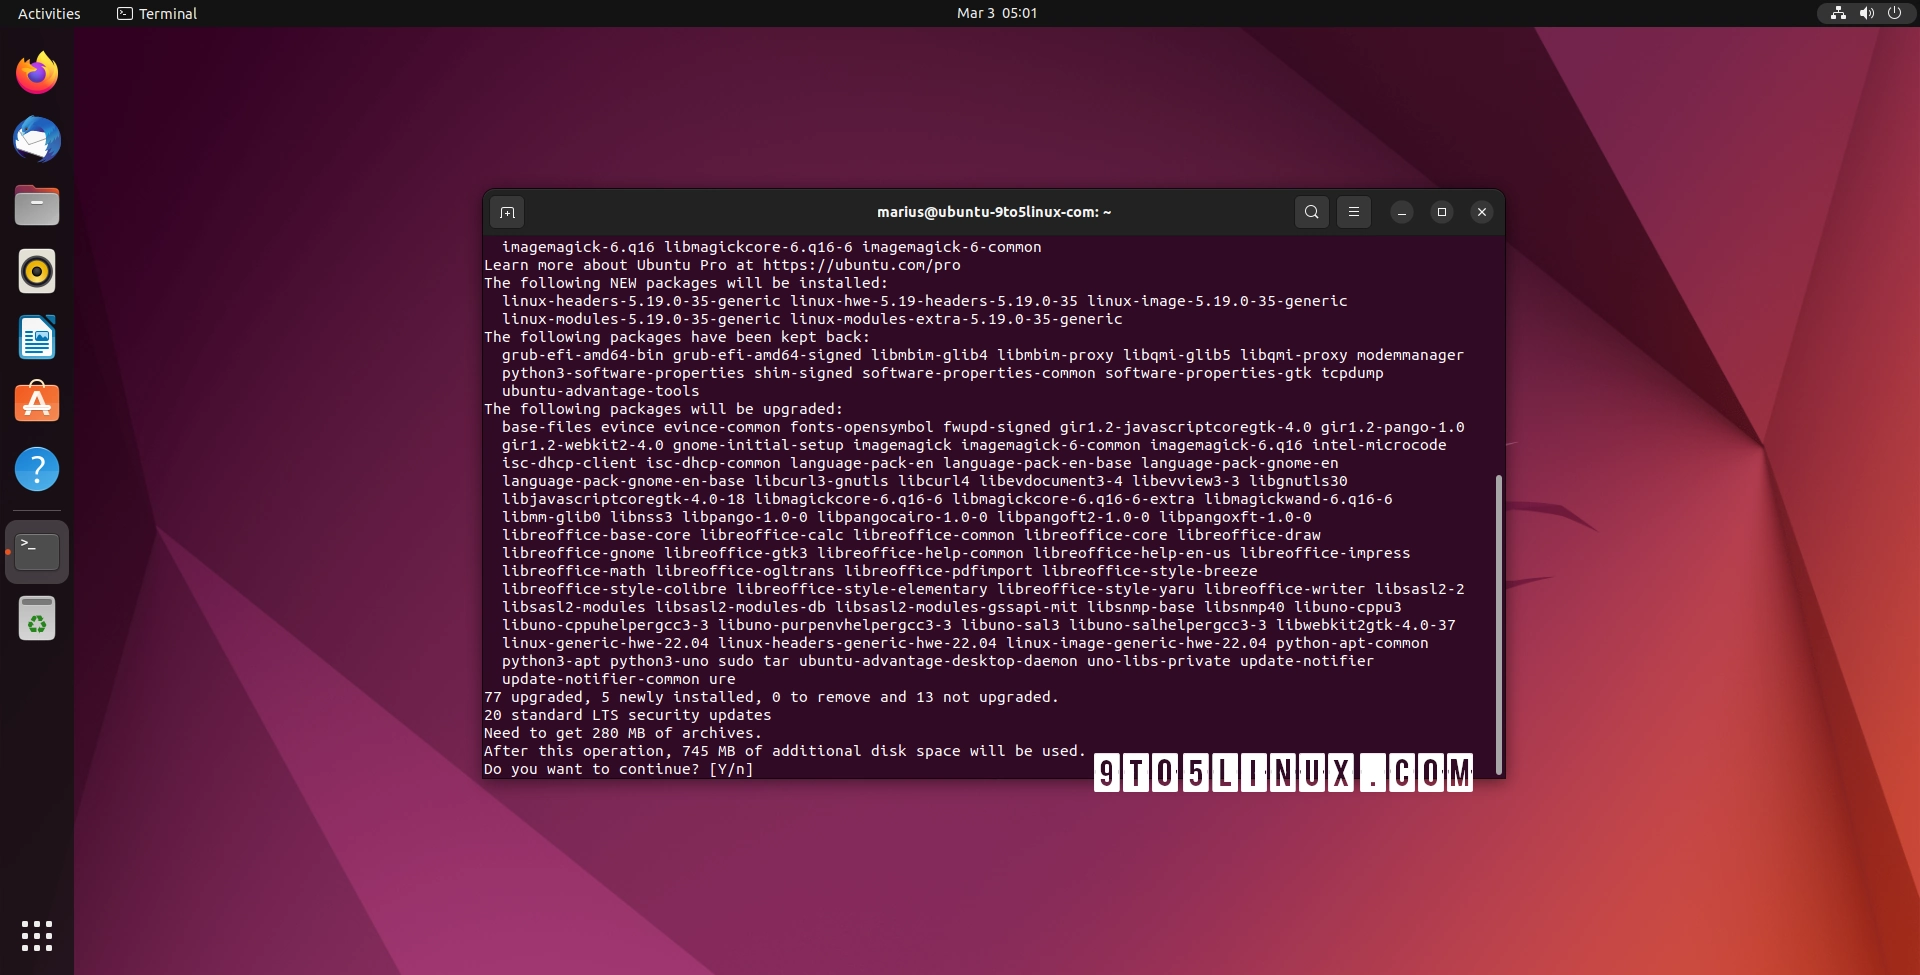 Latest Ubuntu Linux Kernel Security Updates Patch 17 Vulnerabilities